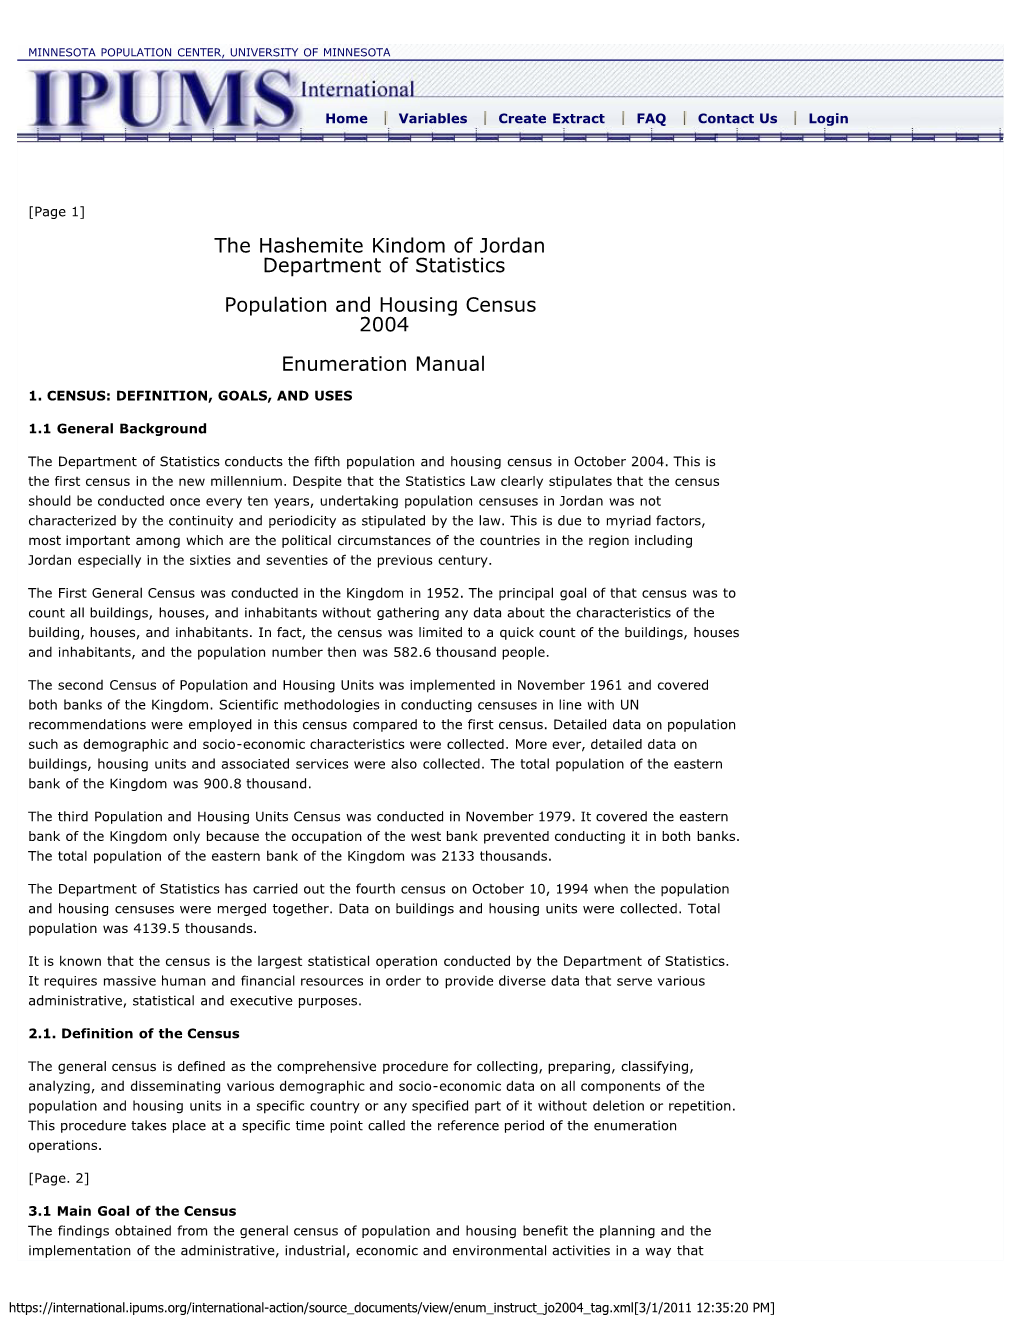 The Hashemite Kindom of Jordan Department of Statistics Population and Housing Census 2004 Enumeration Manual